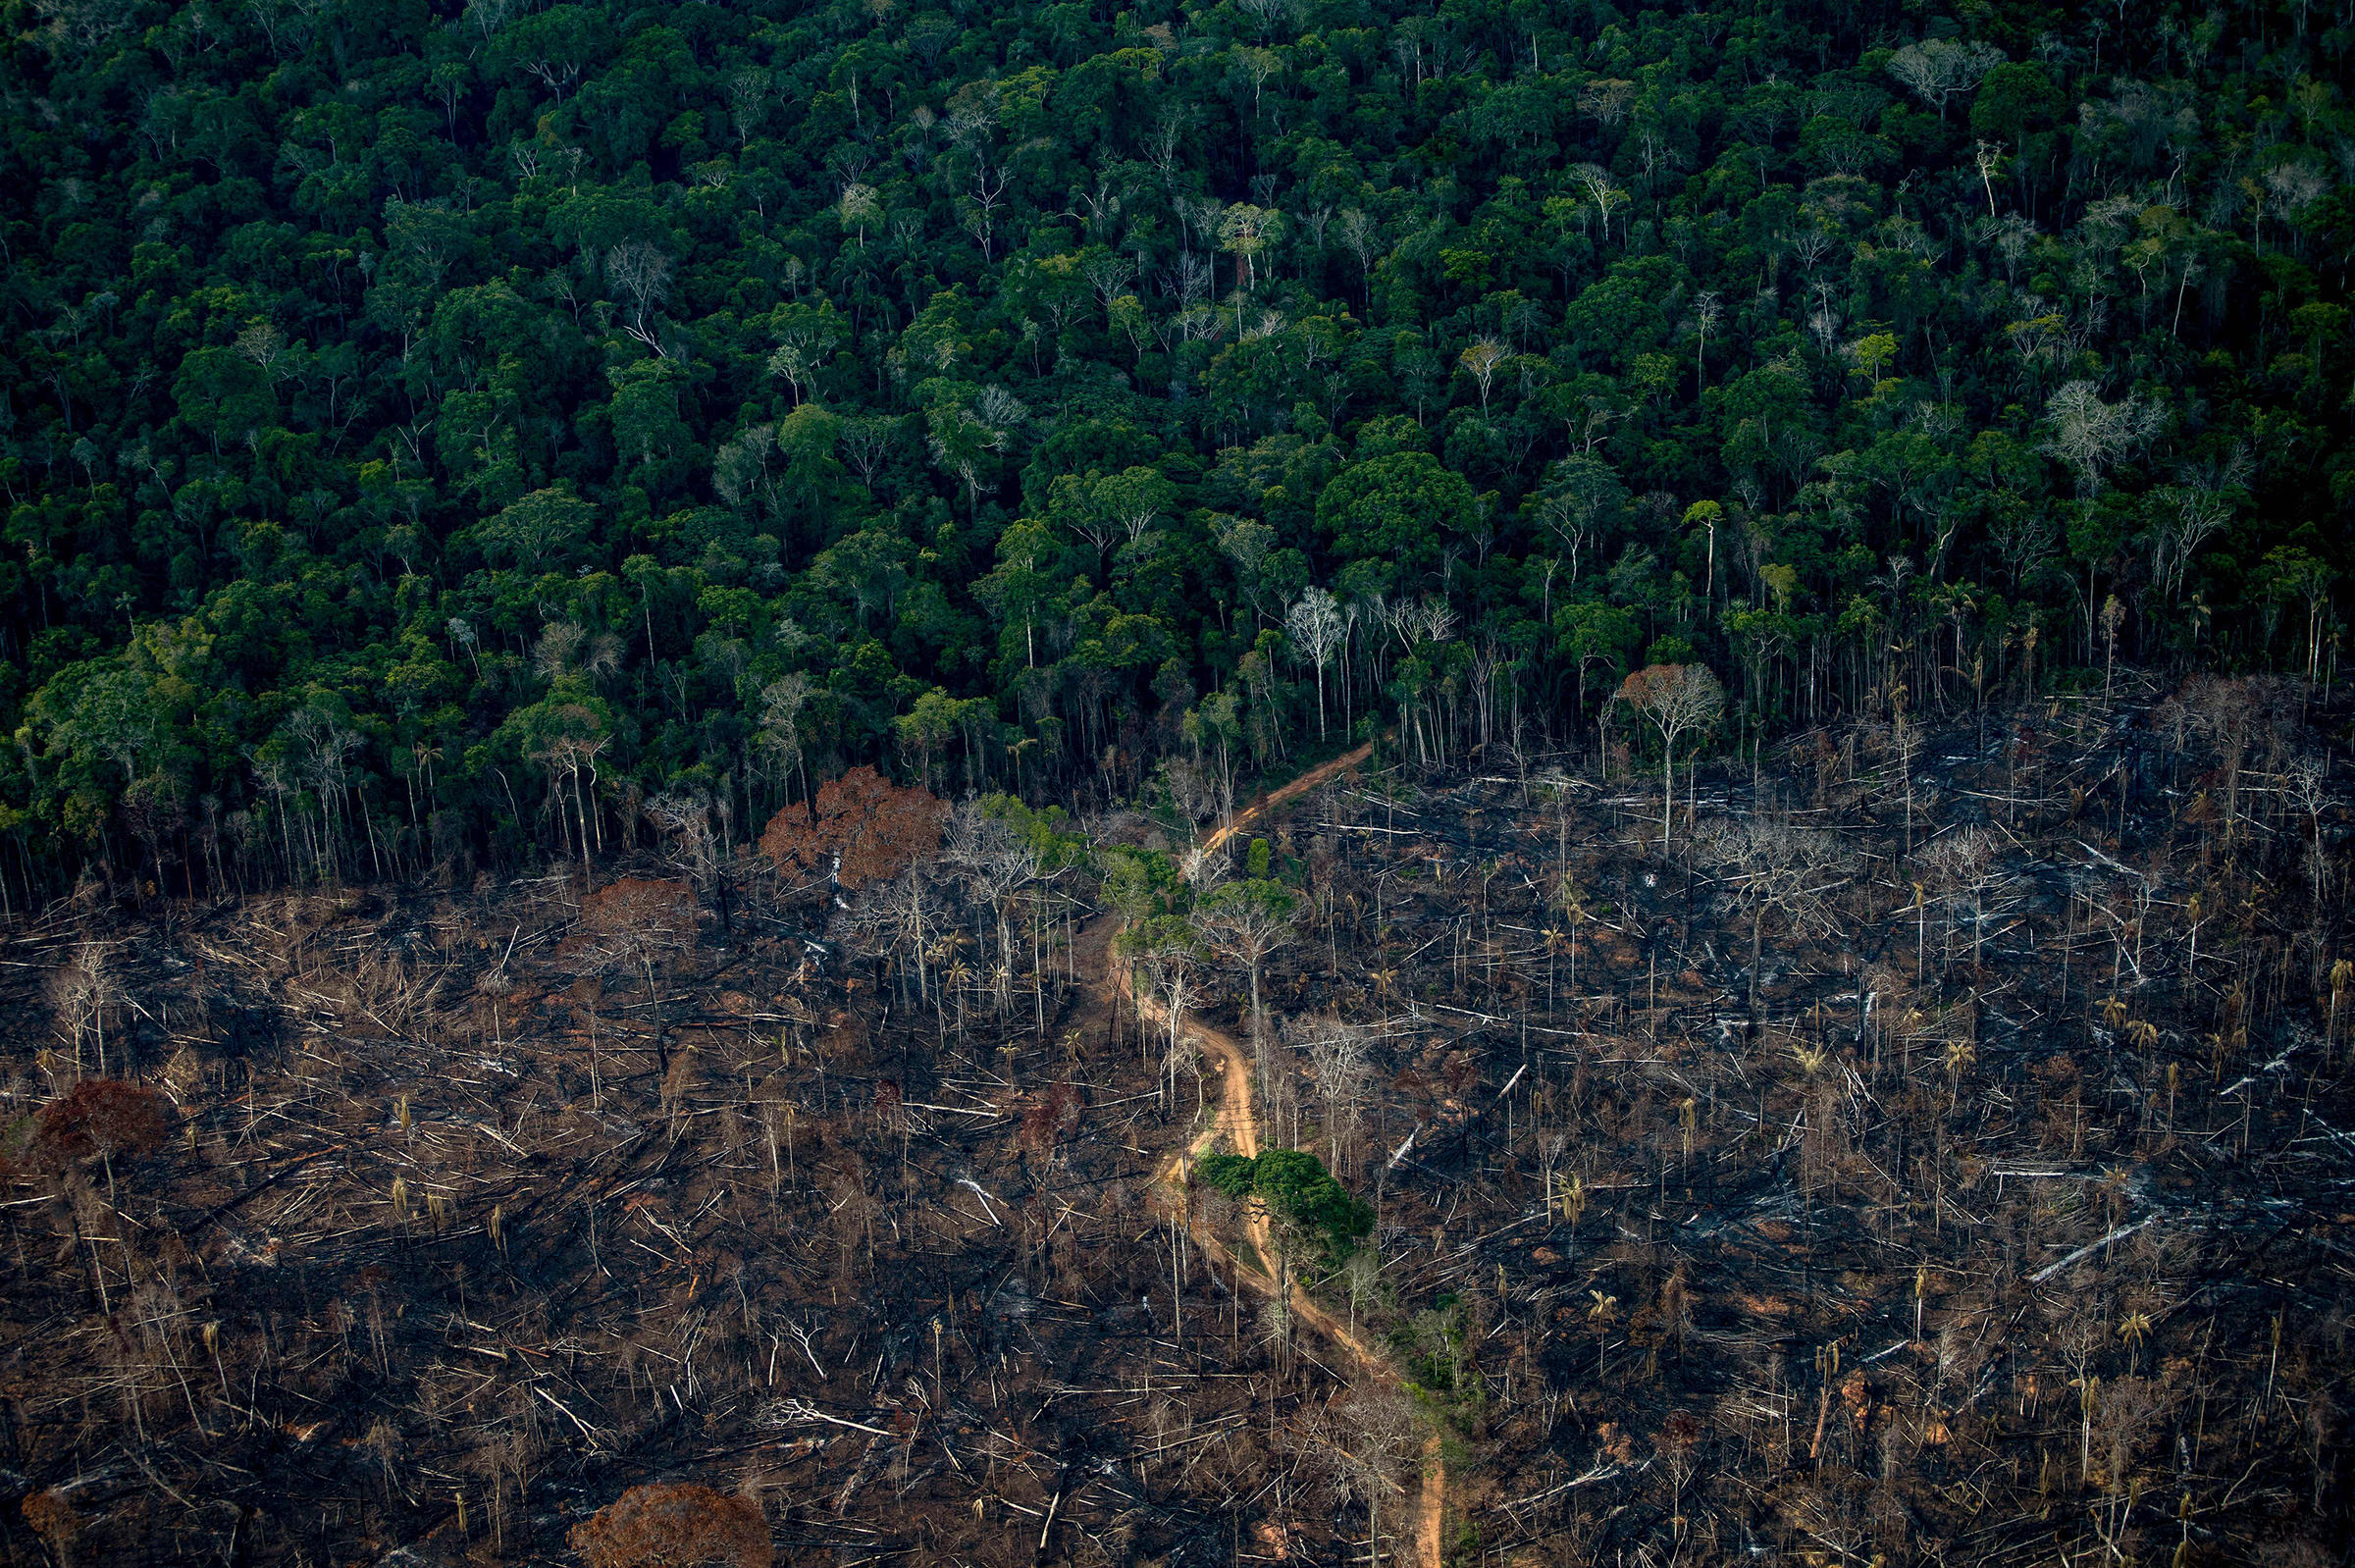 deforestation in brazil case study